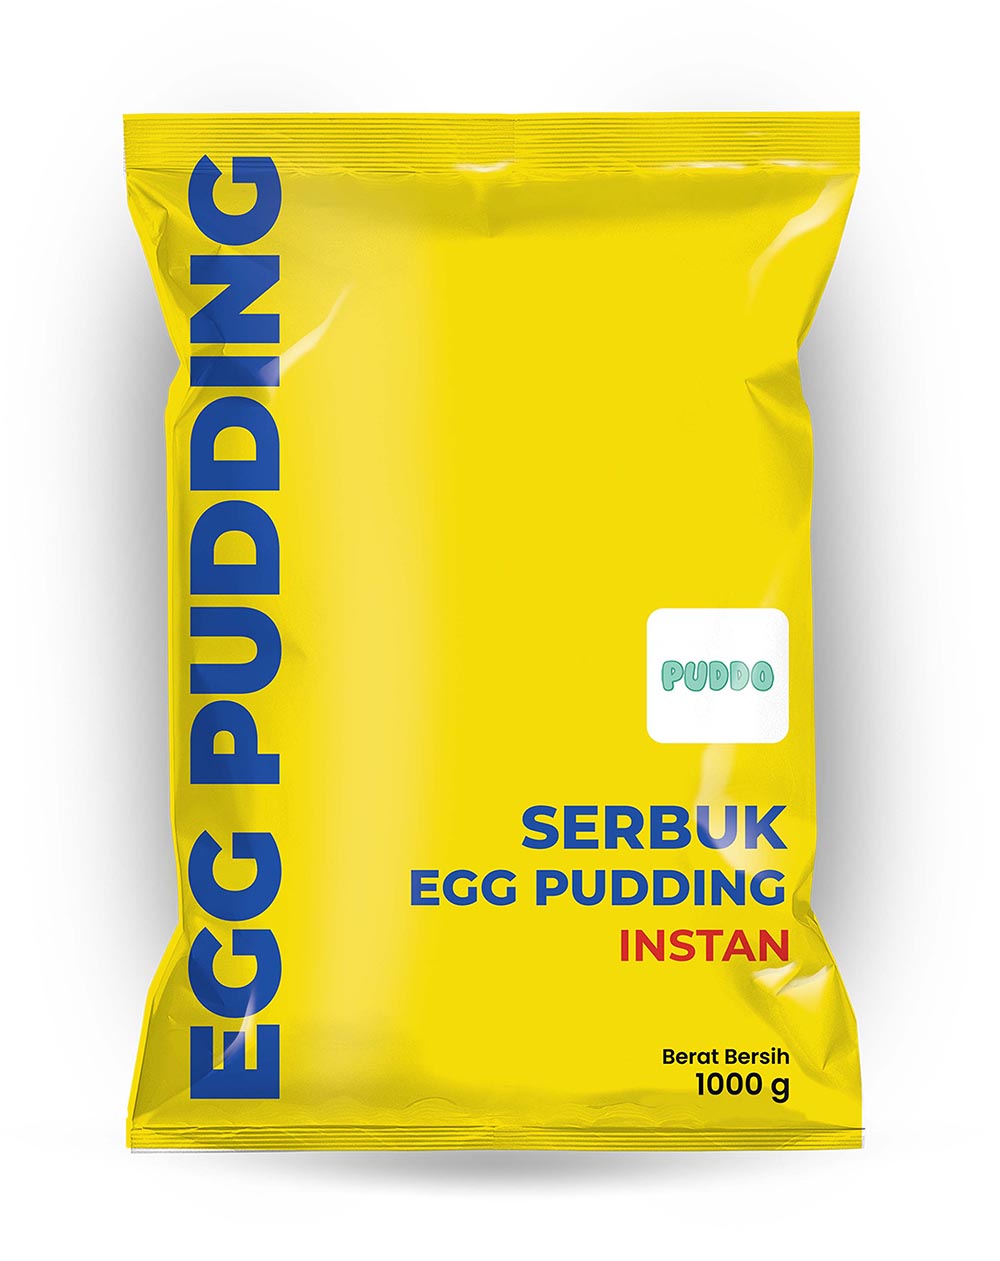 Topping Minuman Egg Pudding